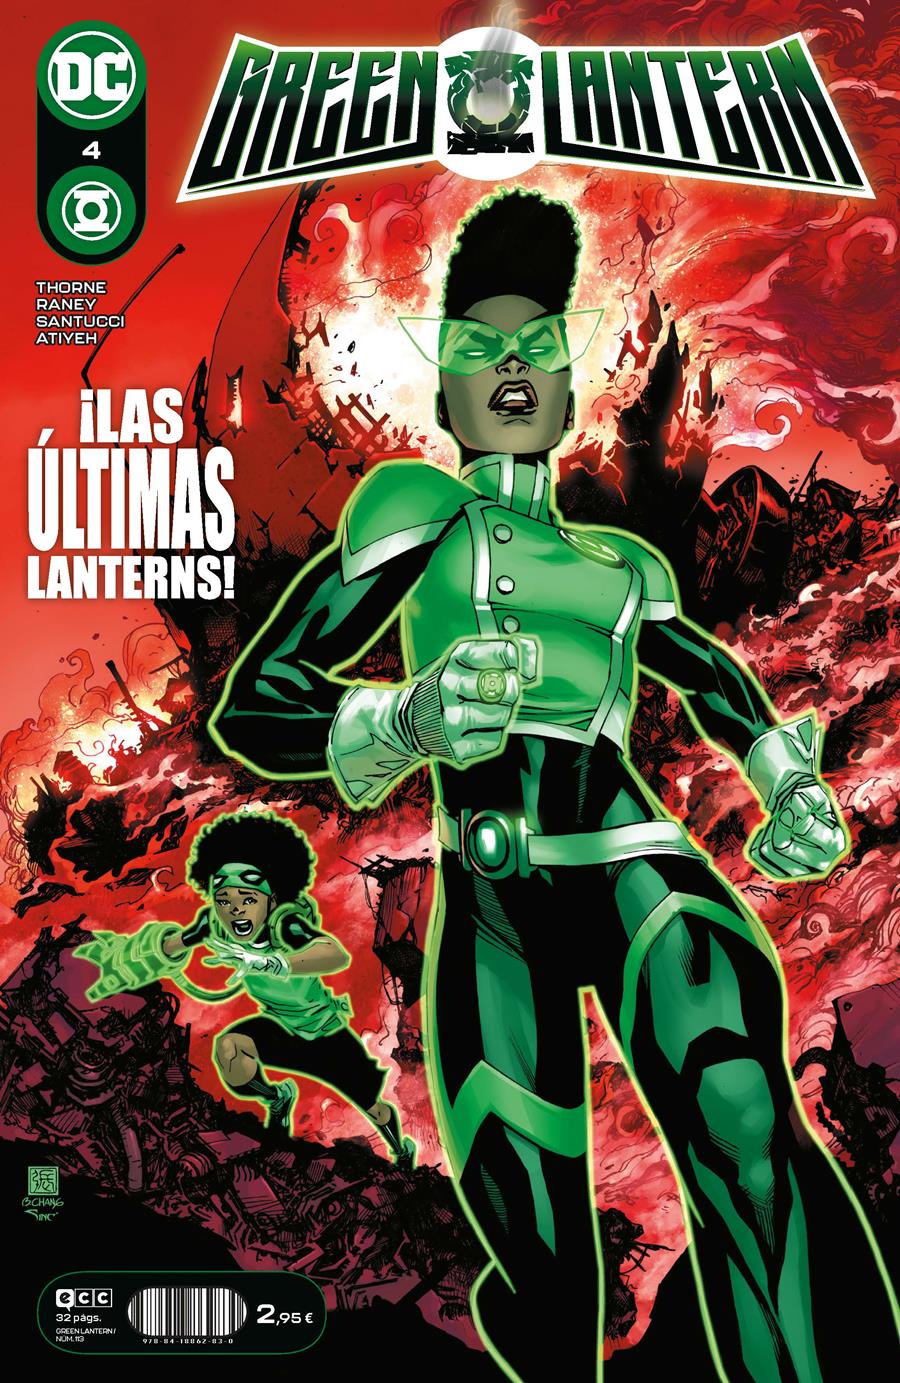 Green Lantern núm. 4/ 113 | N0222-ECC15 | Geoffrey Thorne / Marco Santucci / Tom Raney | Terra de Còmic - Tu tienda de cómics online especializada en cómics, manga y merchandising